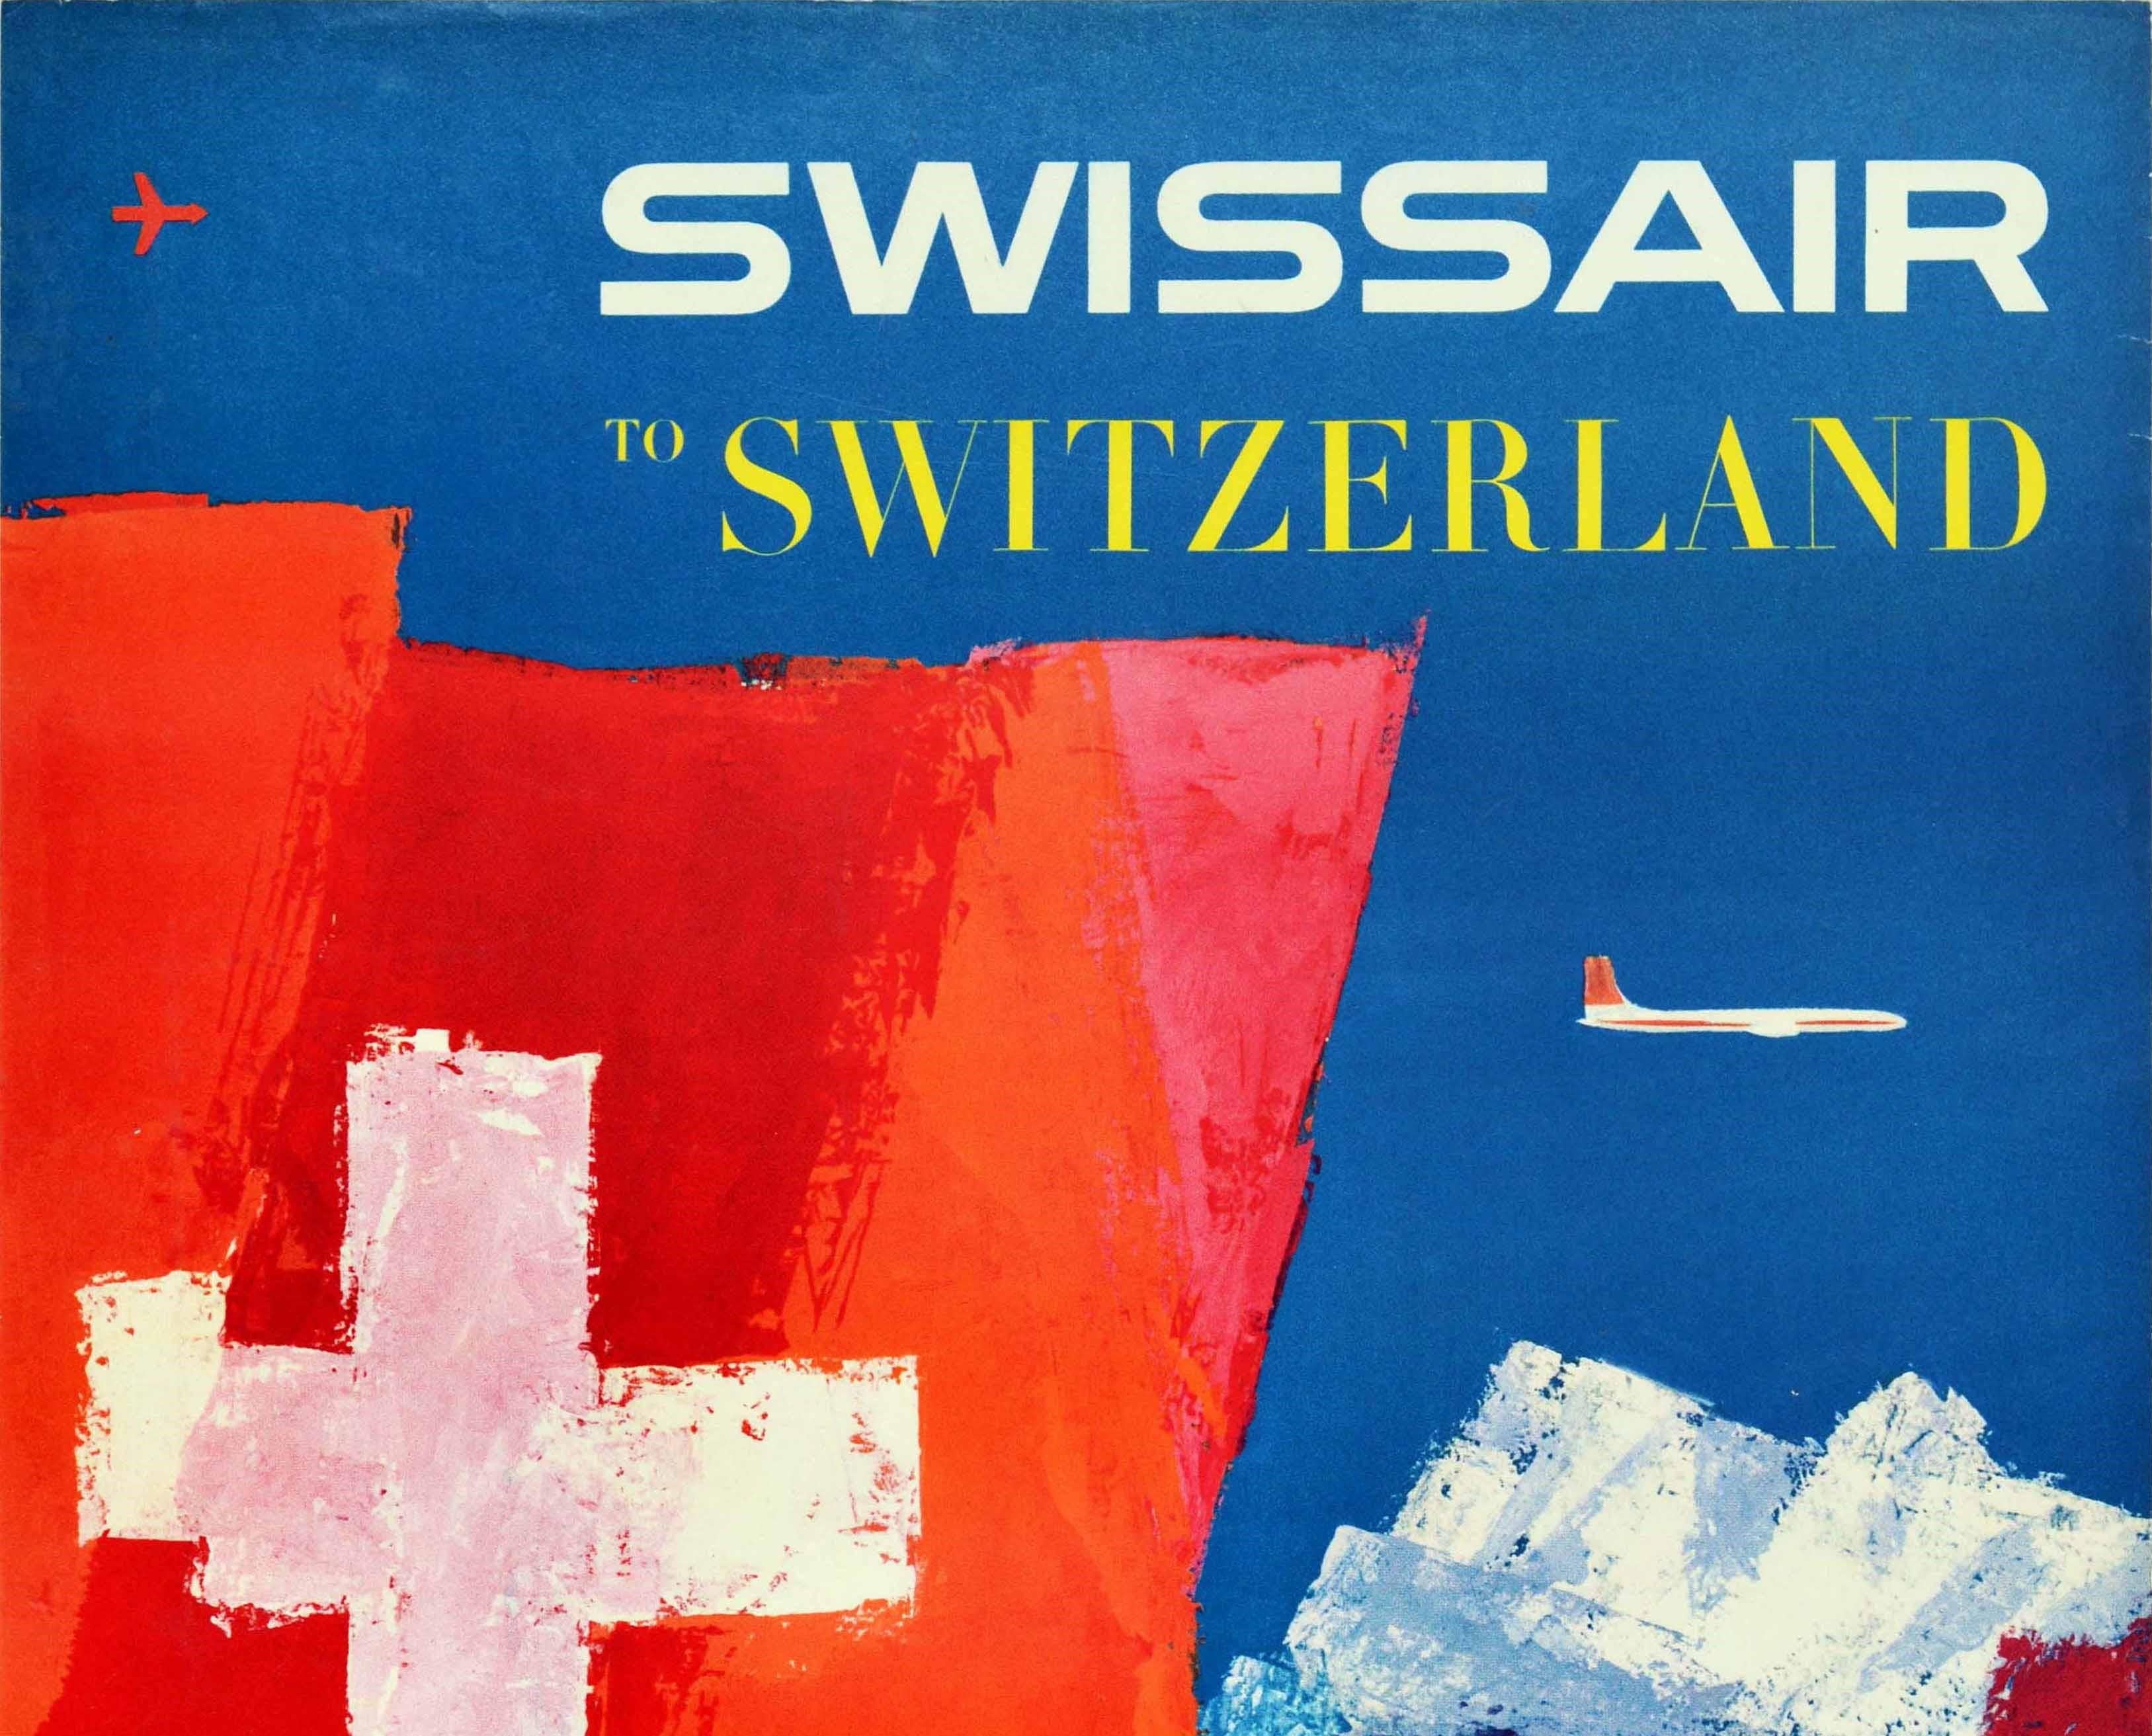 Original Vintage Travel Poster Swissair To Switzerland Mountains Lake Swiss Flag - Print by Fritz Bühler